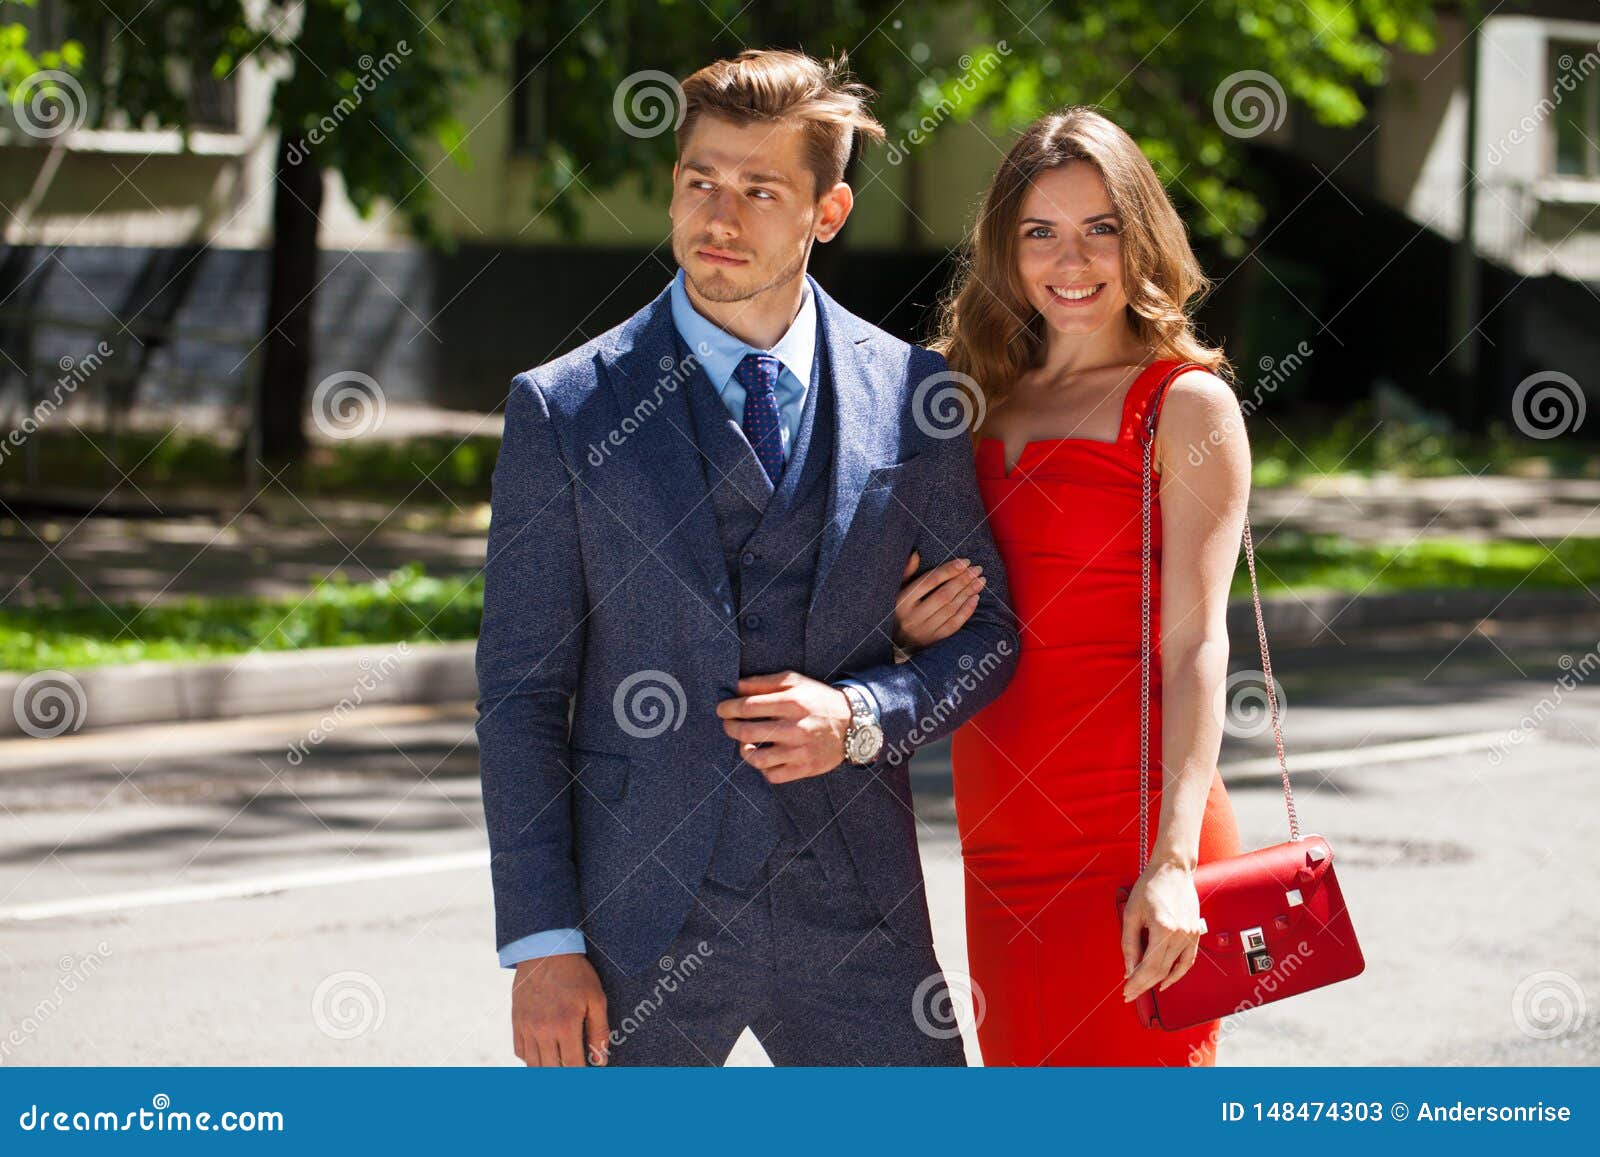 https://thumbs.dreamstime.com/z/young-couple-european-women-men-city-street-lifestyle-togetherness-concept-romance-love-woman-man-148474303.jpg